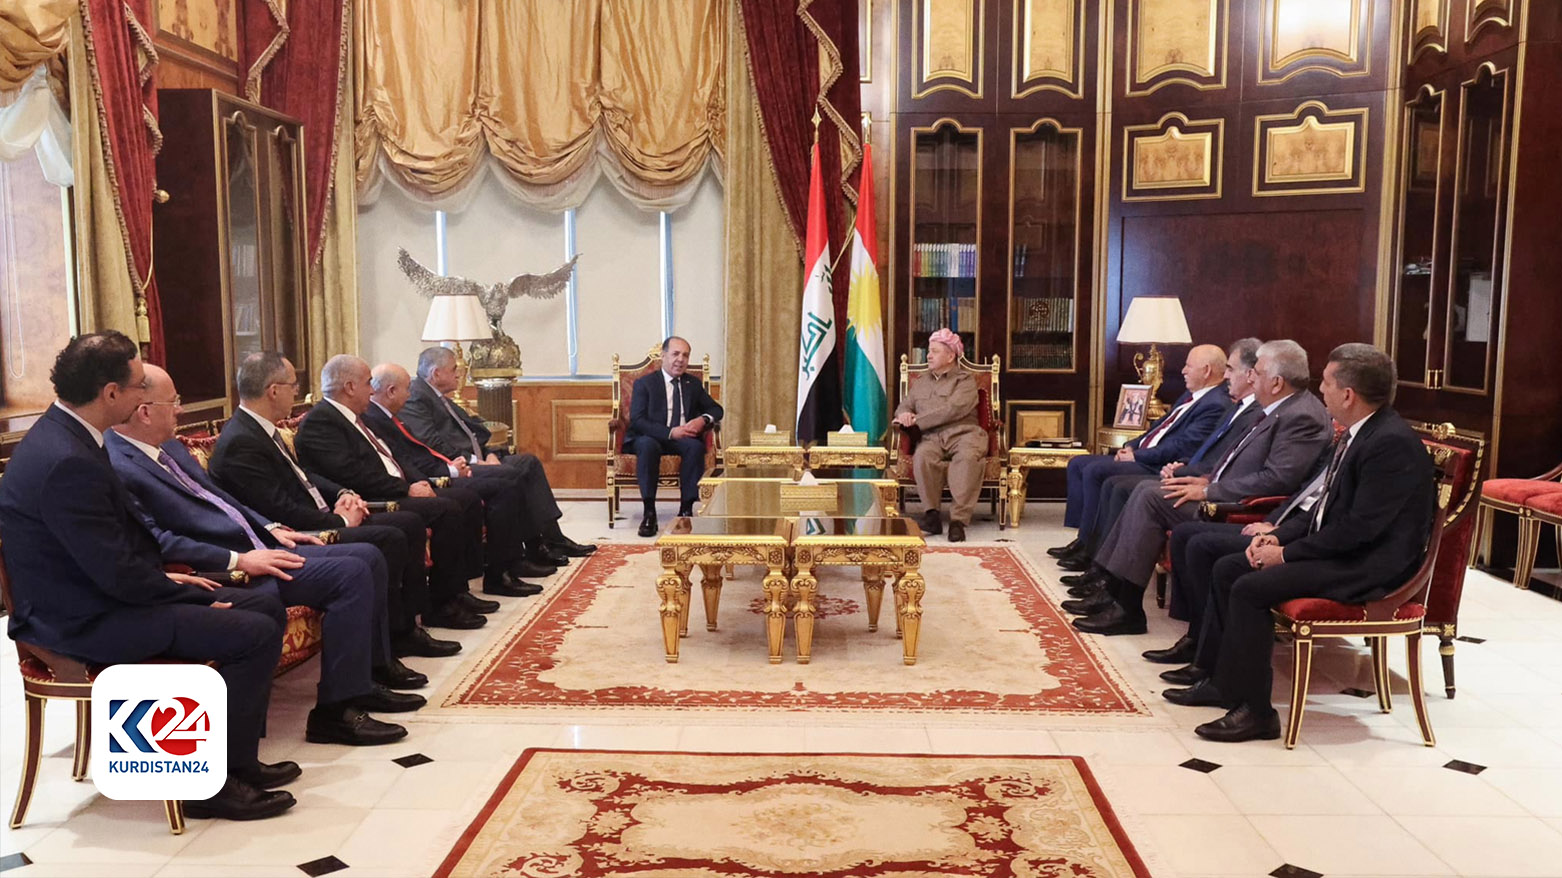 A photo of the meeting between the KDP President Masoud Barzani and Prof. Dr. Mamoun al-Debi'e and the Jordanian Higher Education Delegation. (Photo: Barzani HQ)